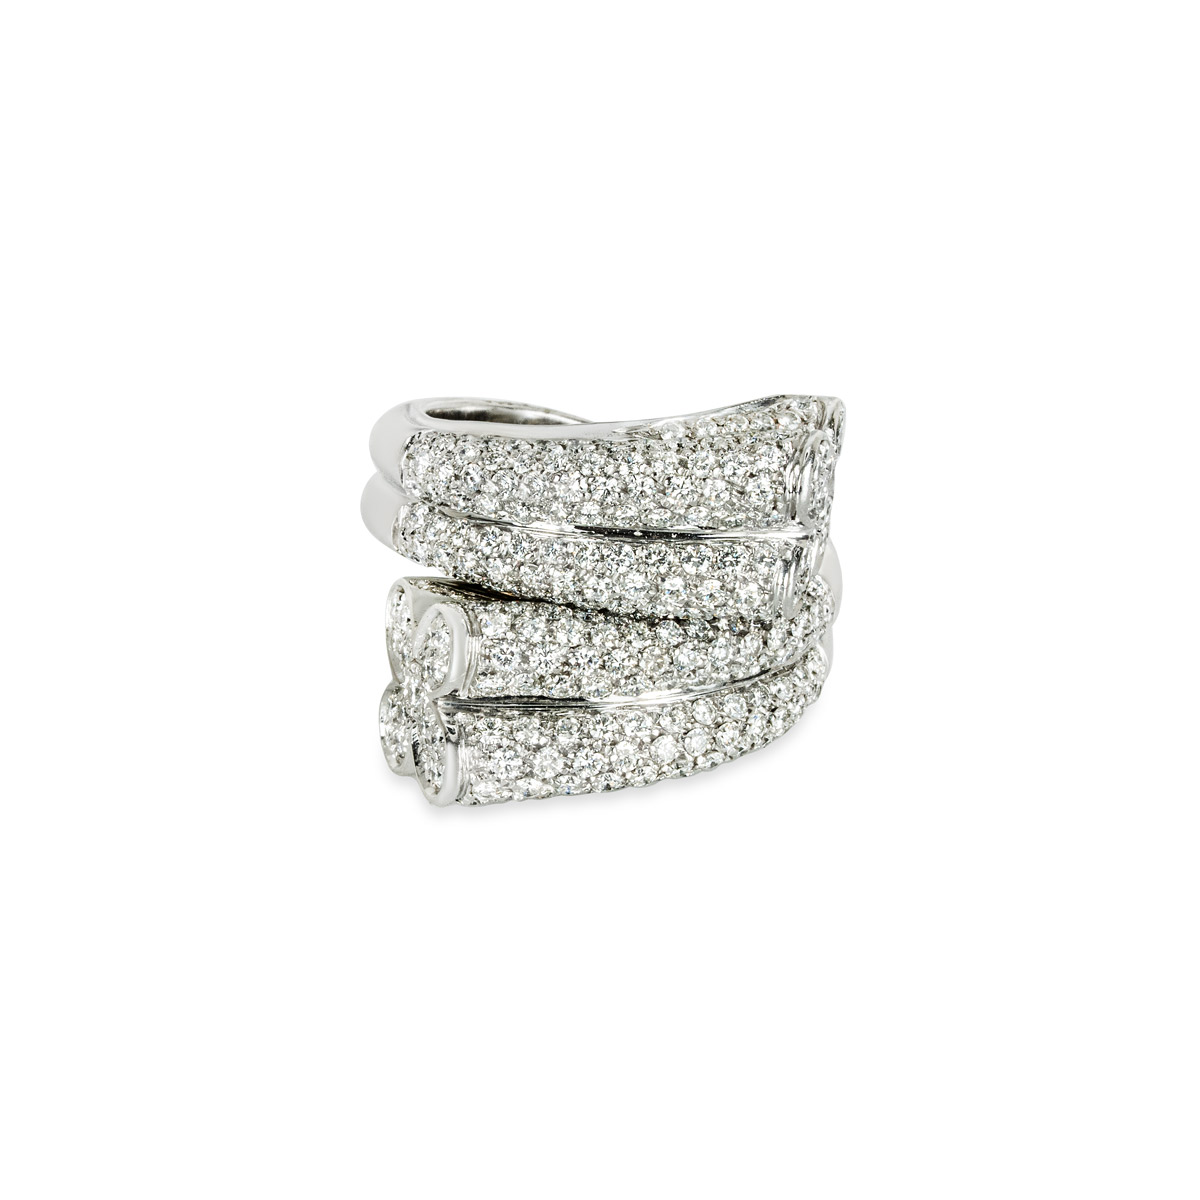 White Gold Diamond Ring 2.44ct G/VS